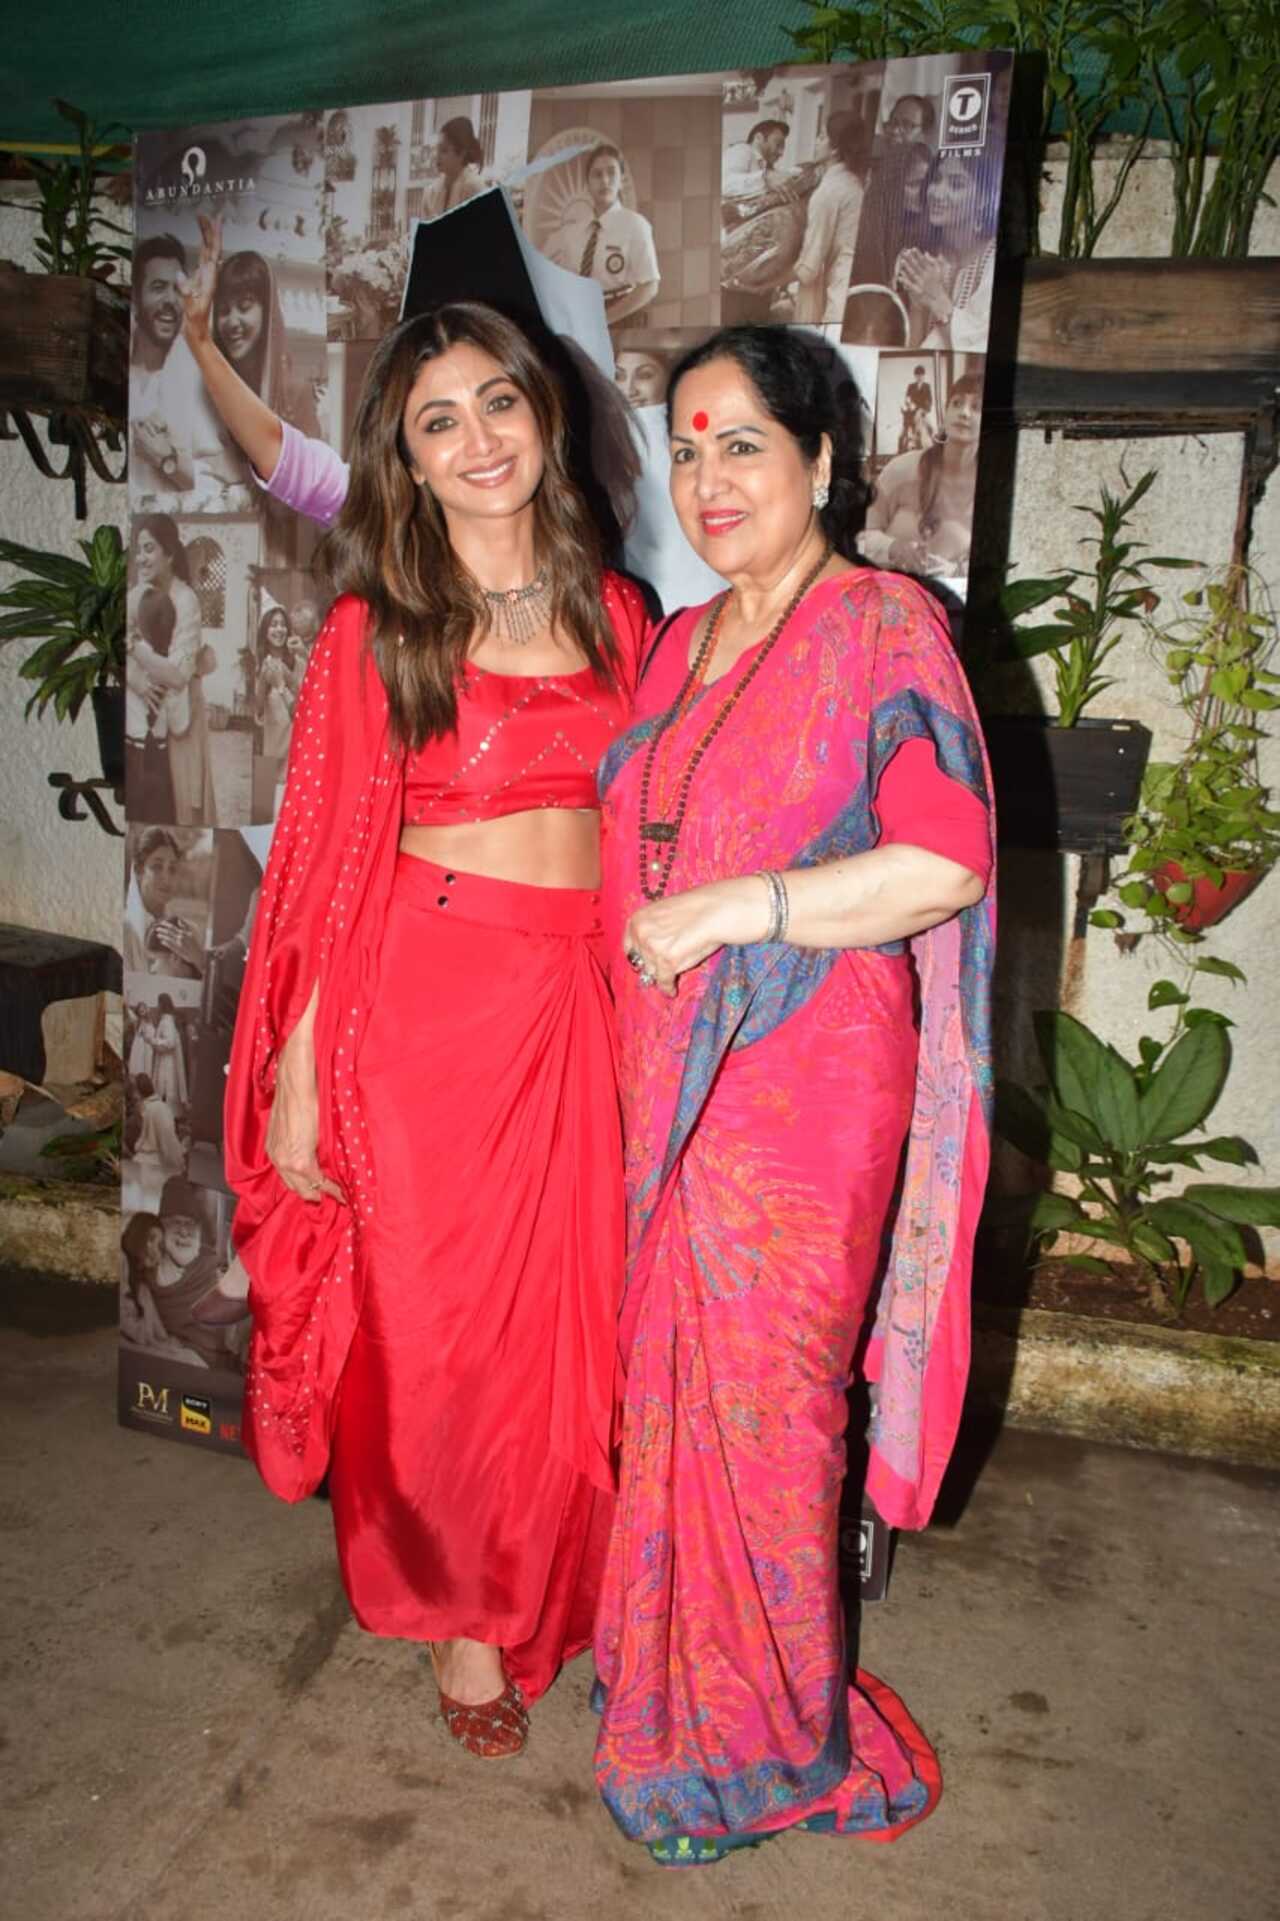 Shilpa Shetty poses with her mother Sunanda Shetty